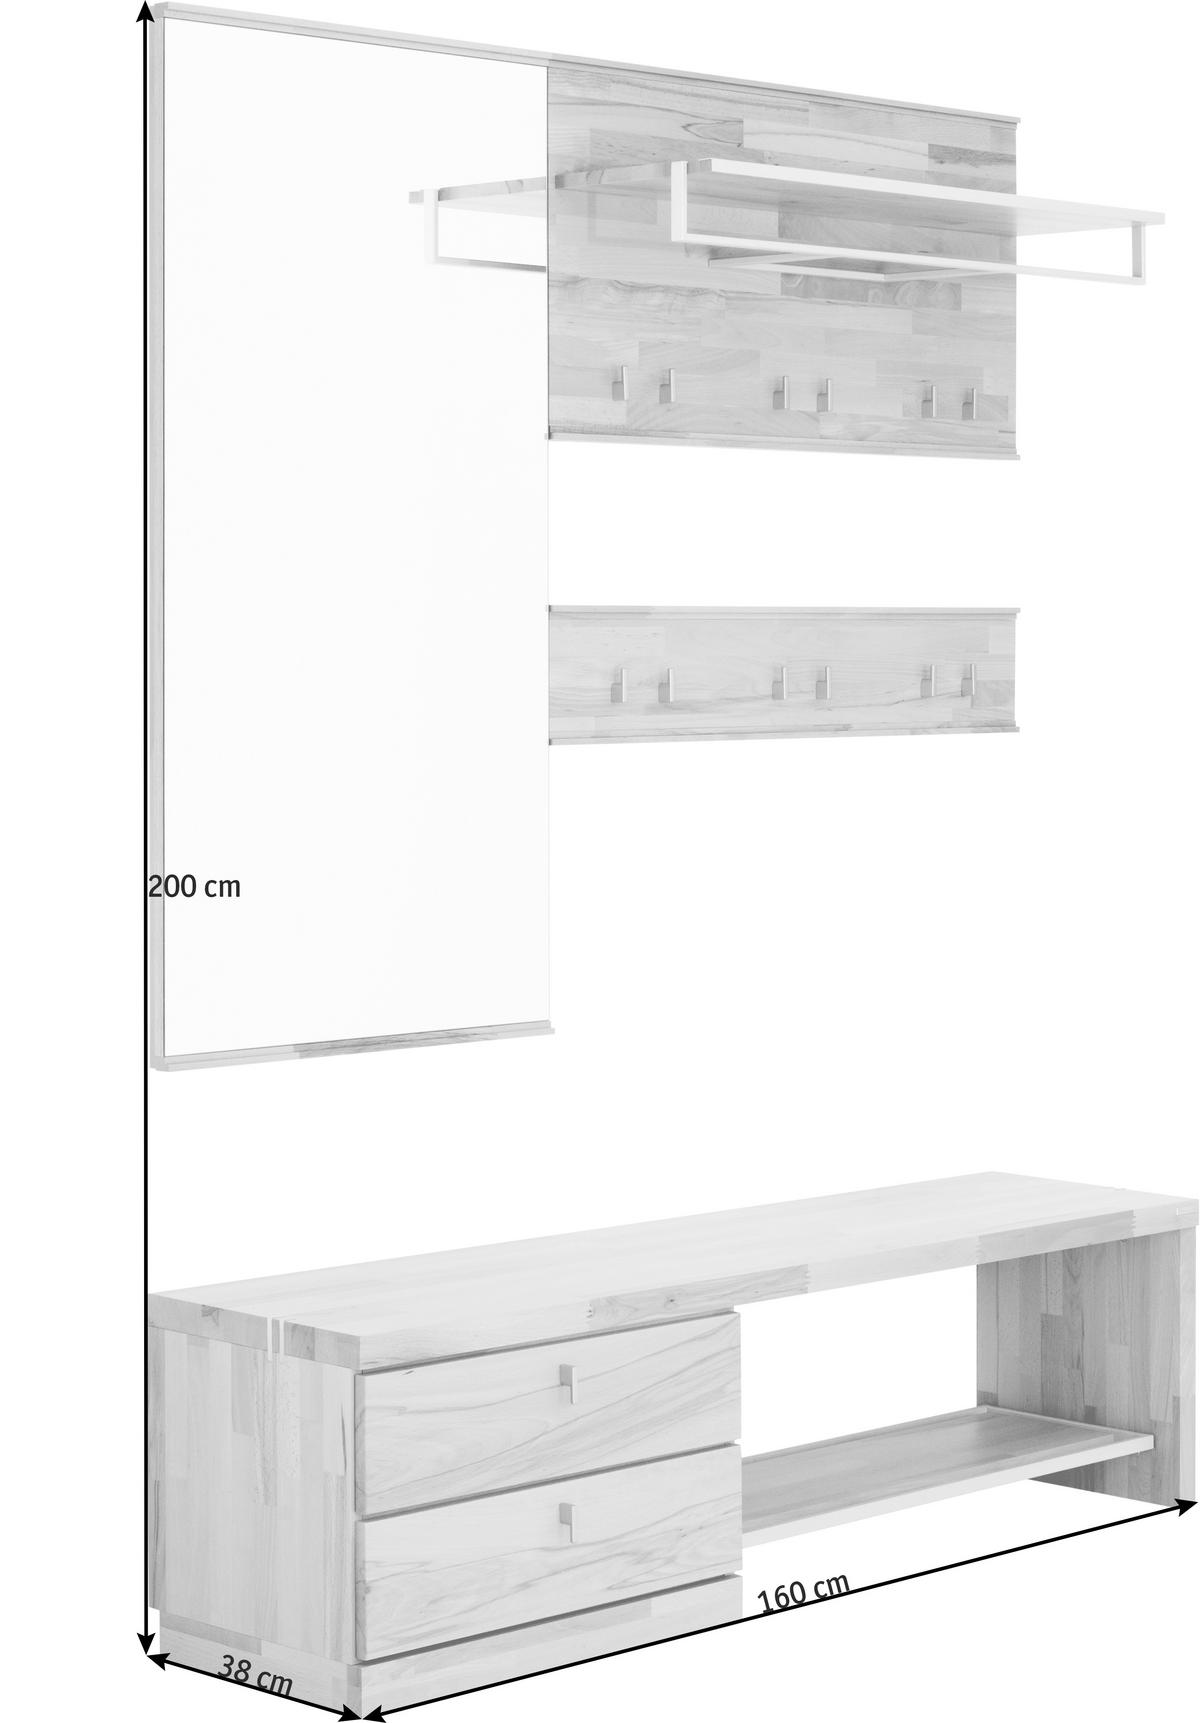 GARDEROBE 160/200/38 cm  - Buchefarben, Design, Glas/Holz (160/200/38cm) - Linea Natura